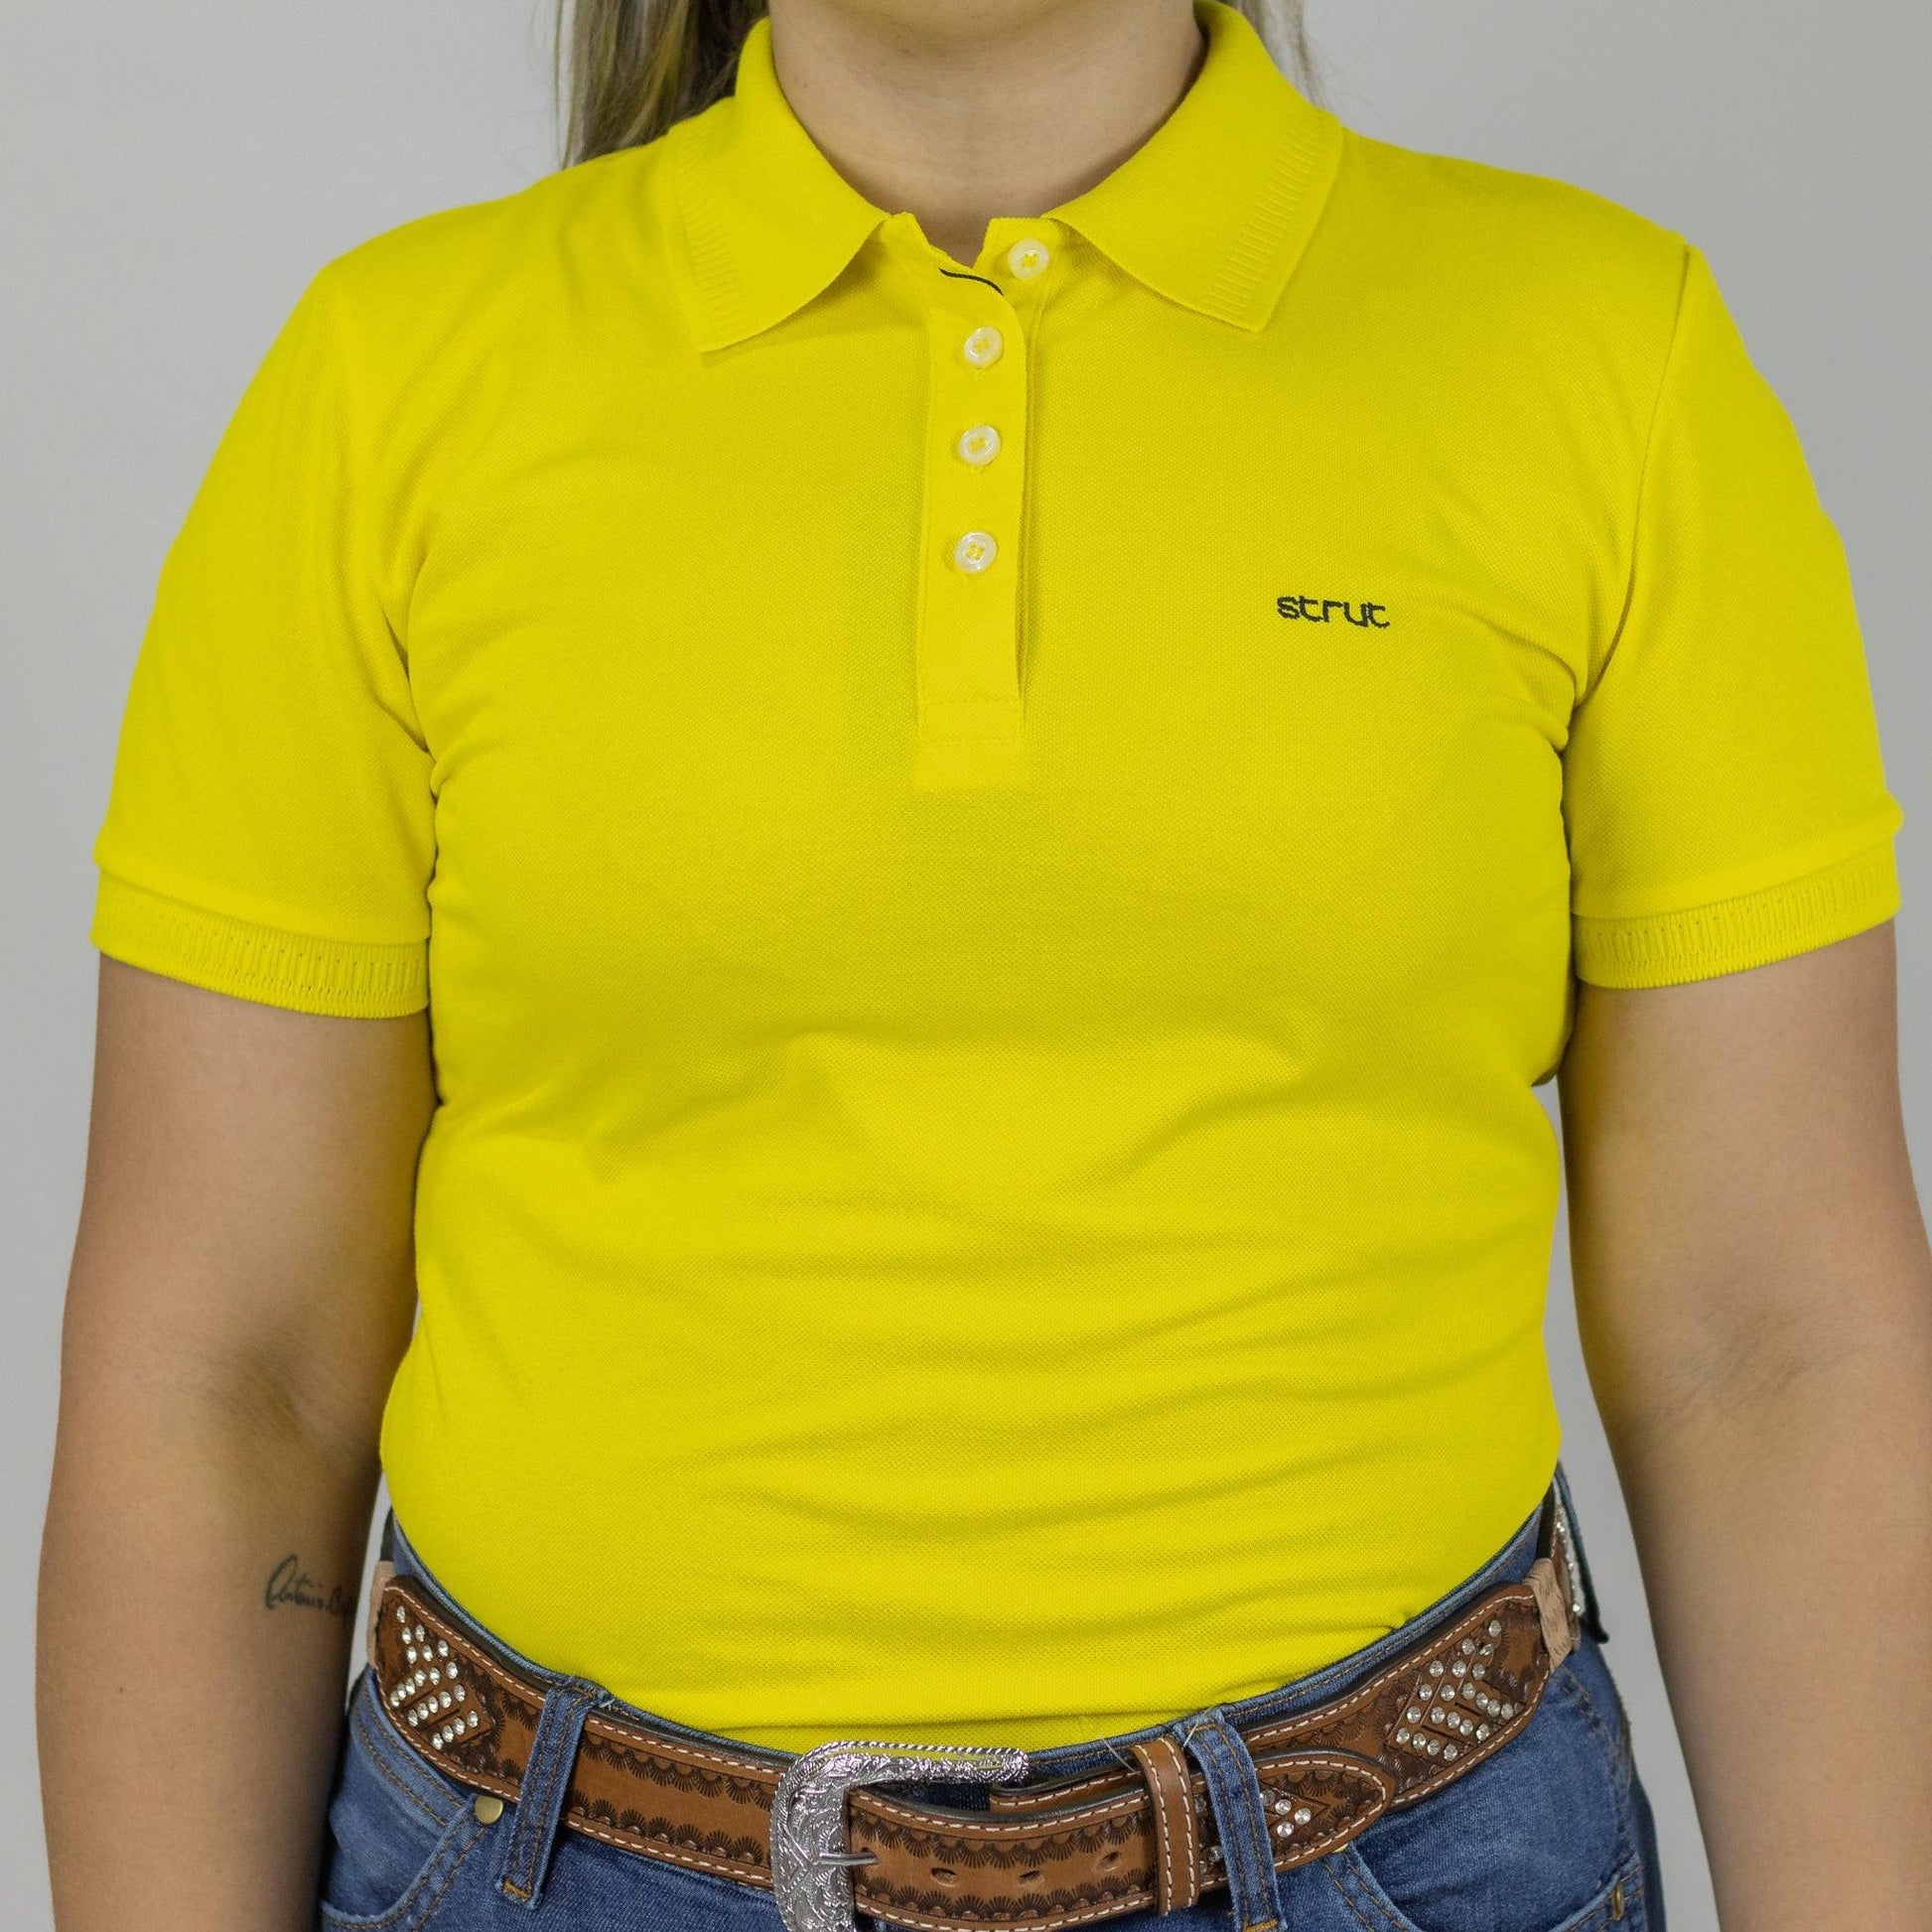 Camisa Polo Strut Feminina Piquet Amarela - Strut